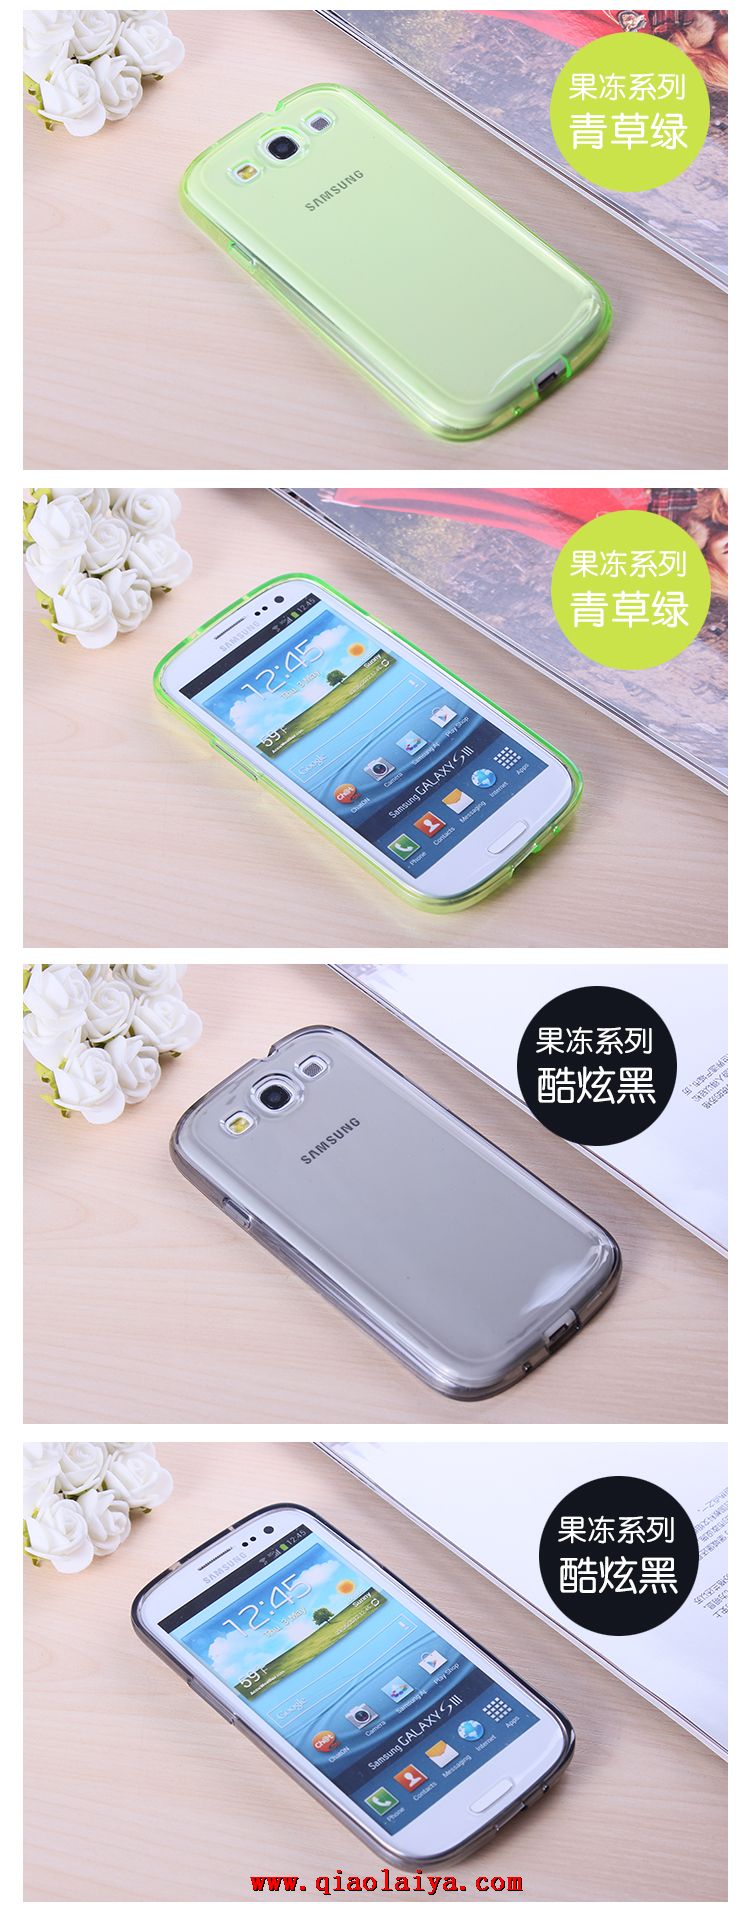 Pas cher Samsung Galaxy S3 i9300 bonbons cas de téléphone de silicone coque